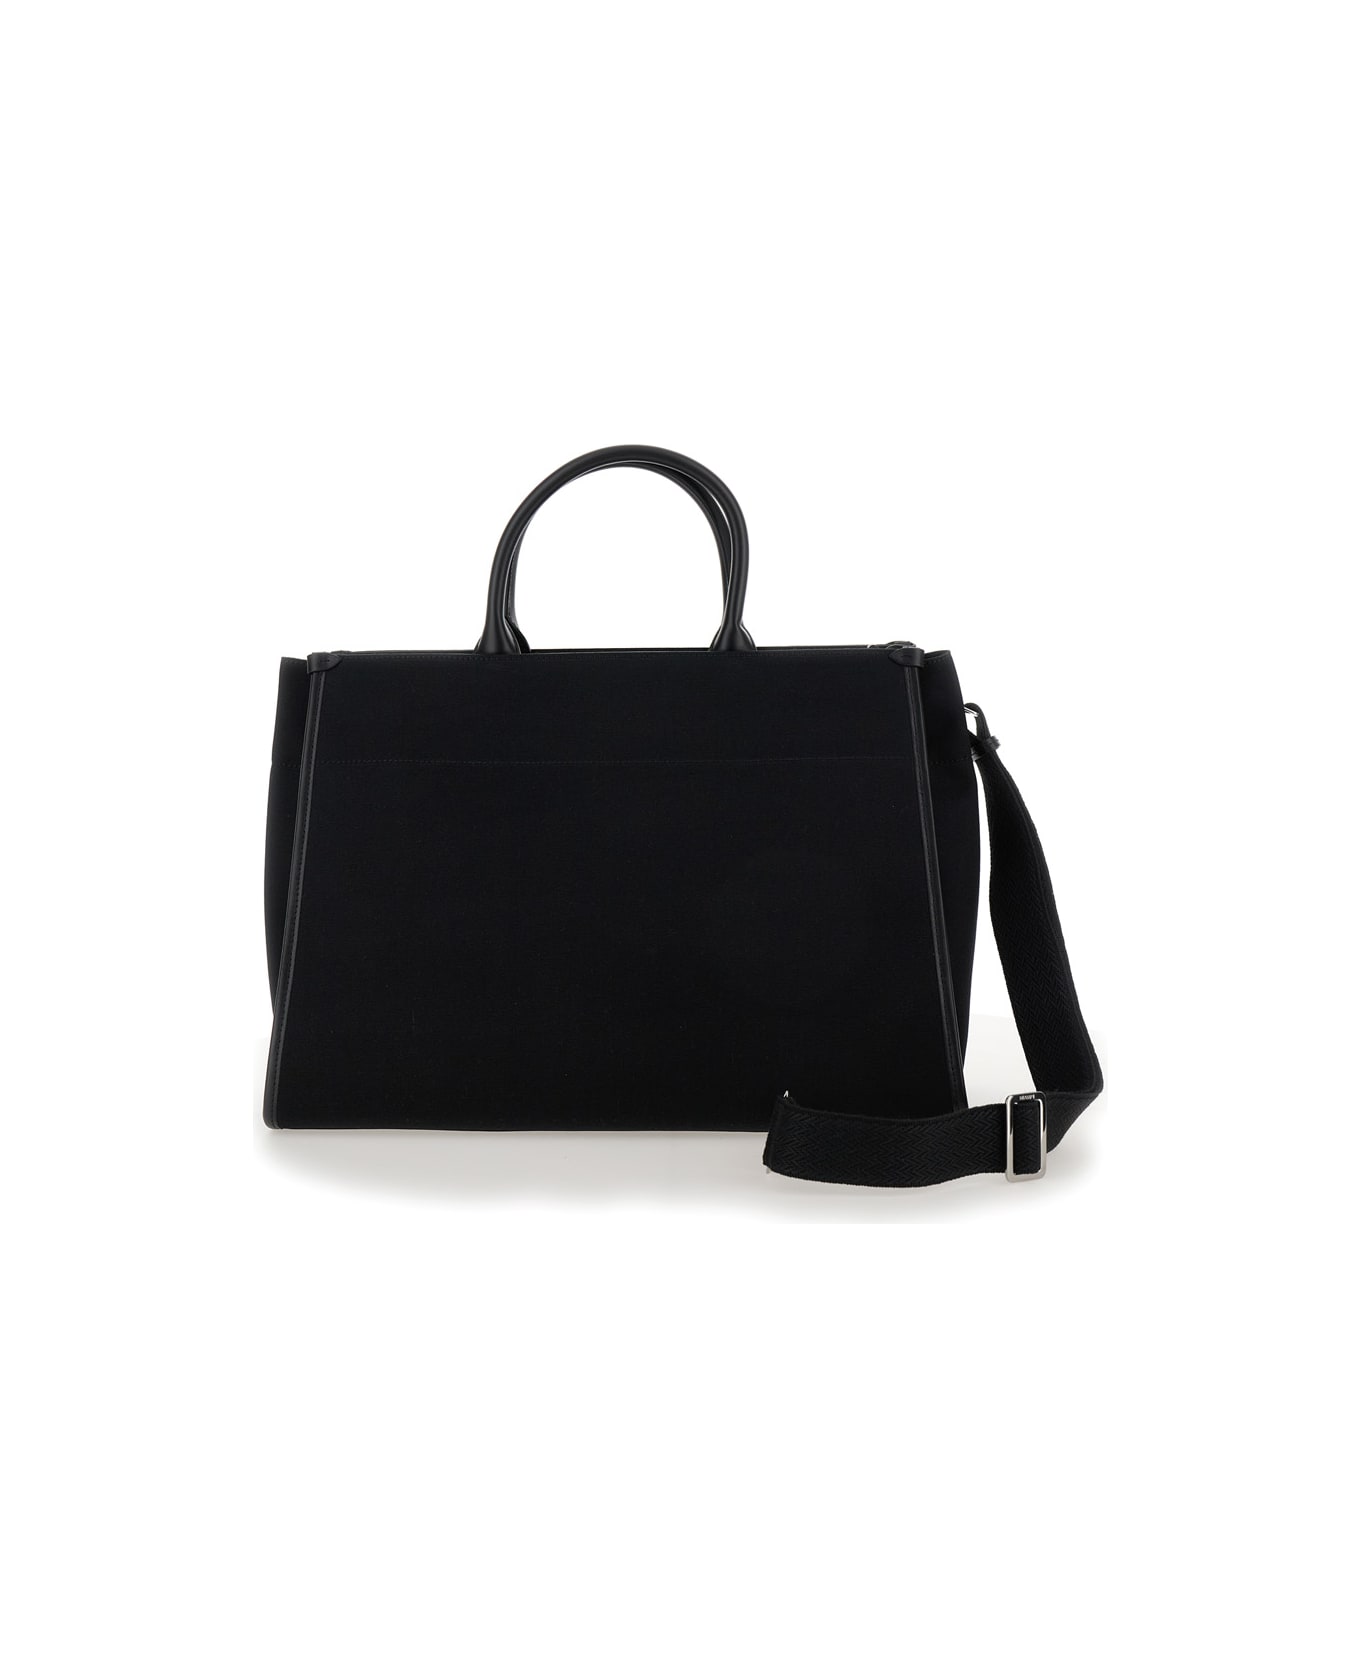 Lanvin Tote Bag Mm With Strap - Black